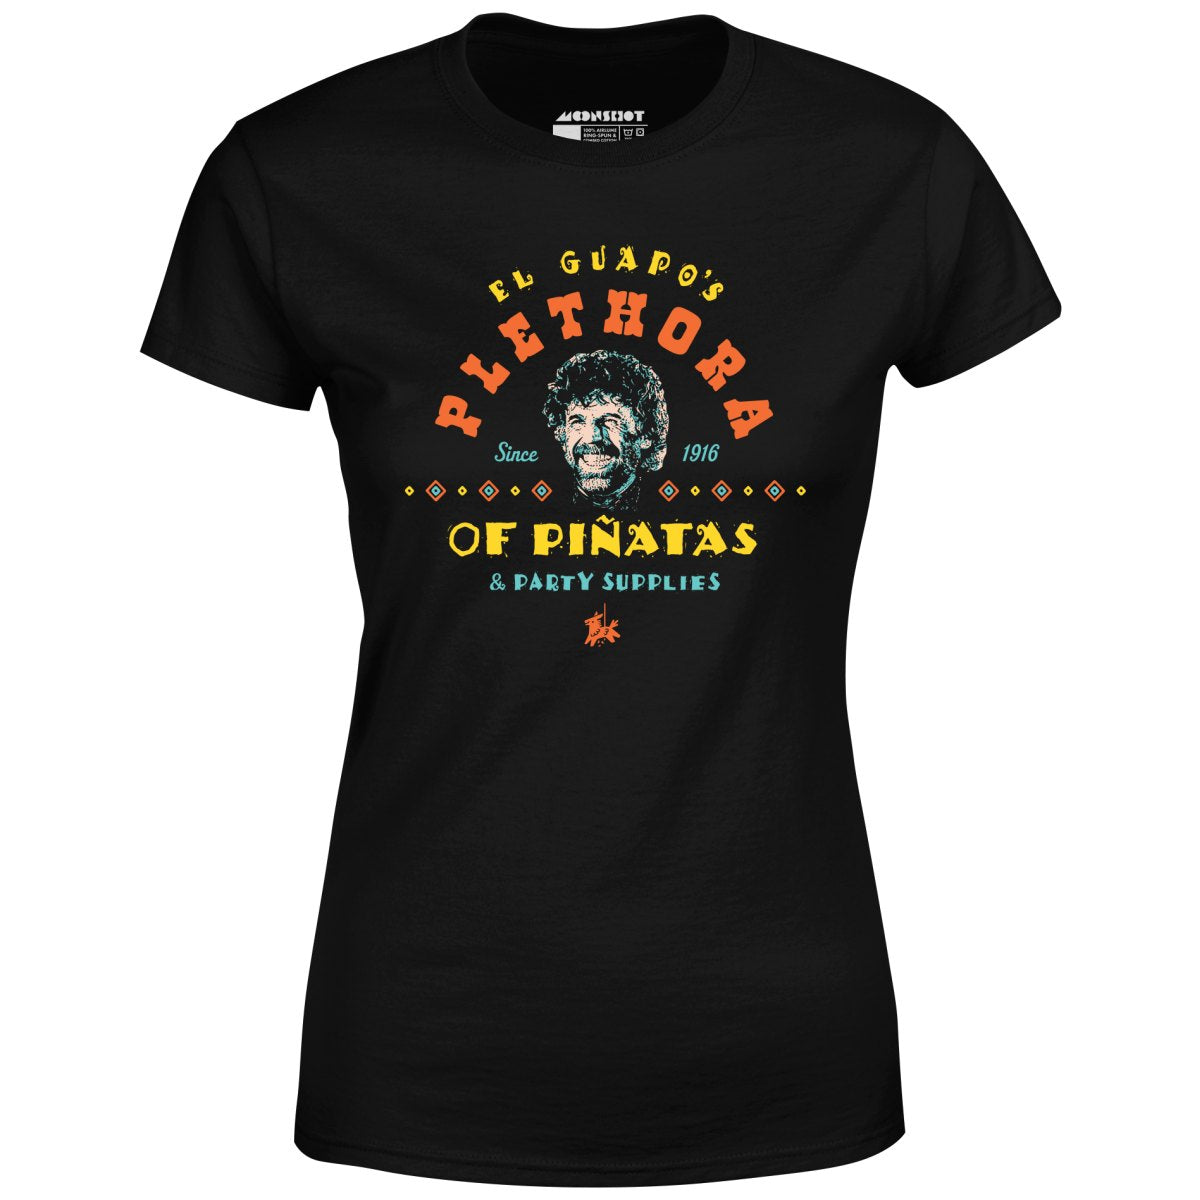 El Guapo's Plethora of Pinatas & Party Supplies - Women's T-Shirt